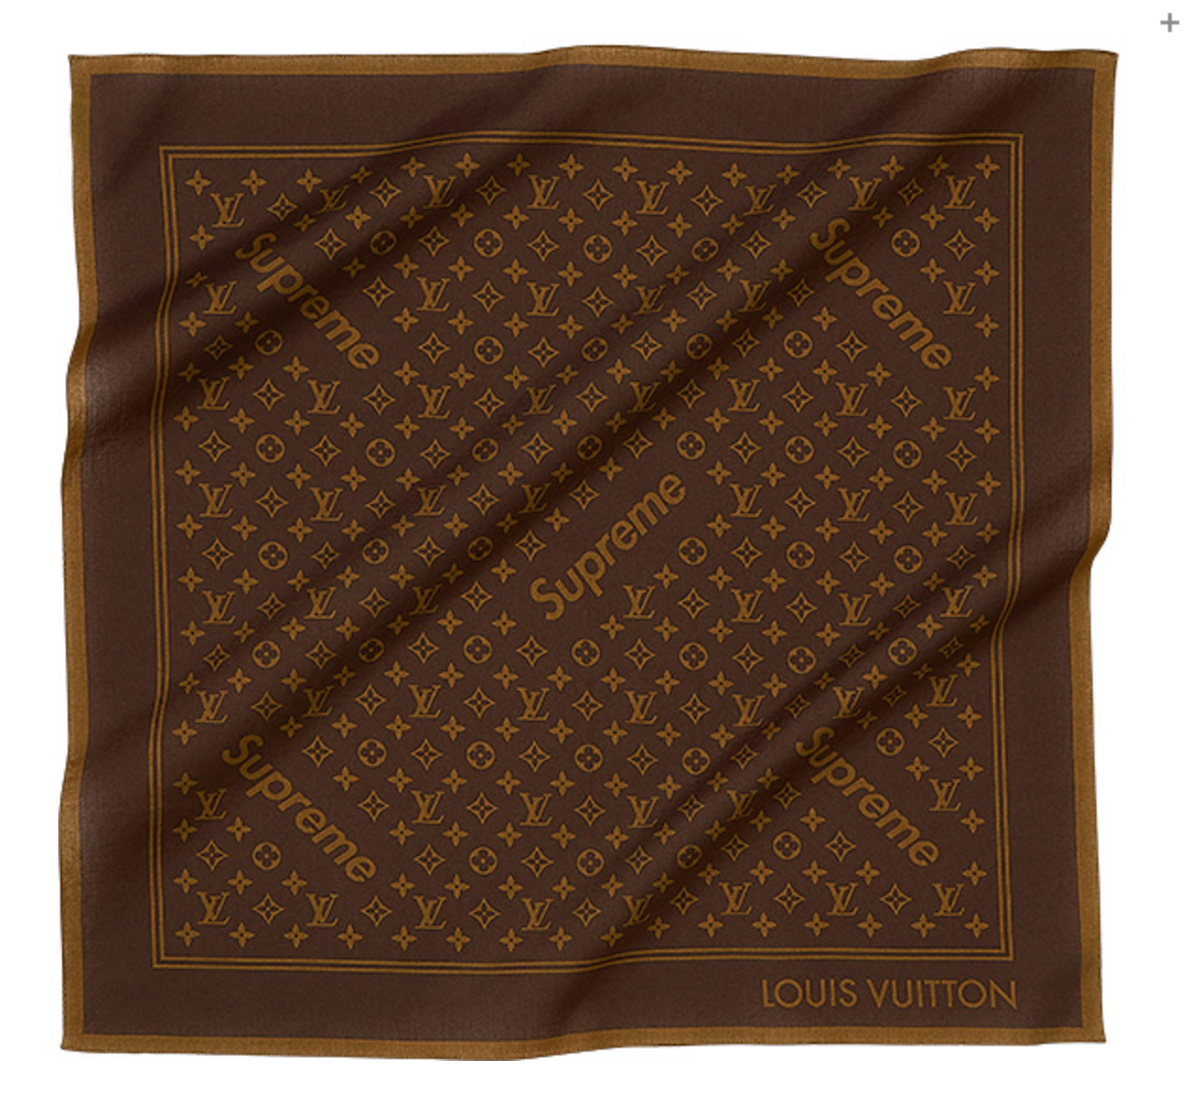 Louis Vuitton X Supreme Monogram Bandana Available For Immediate